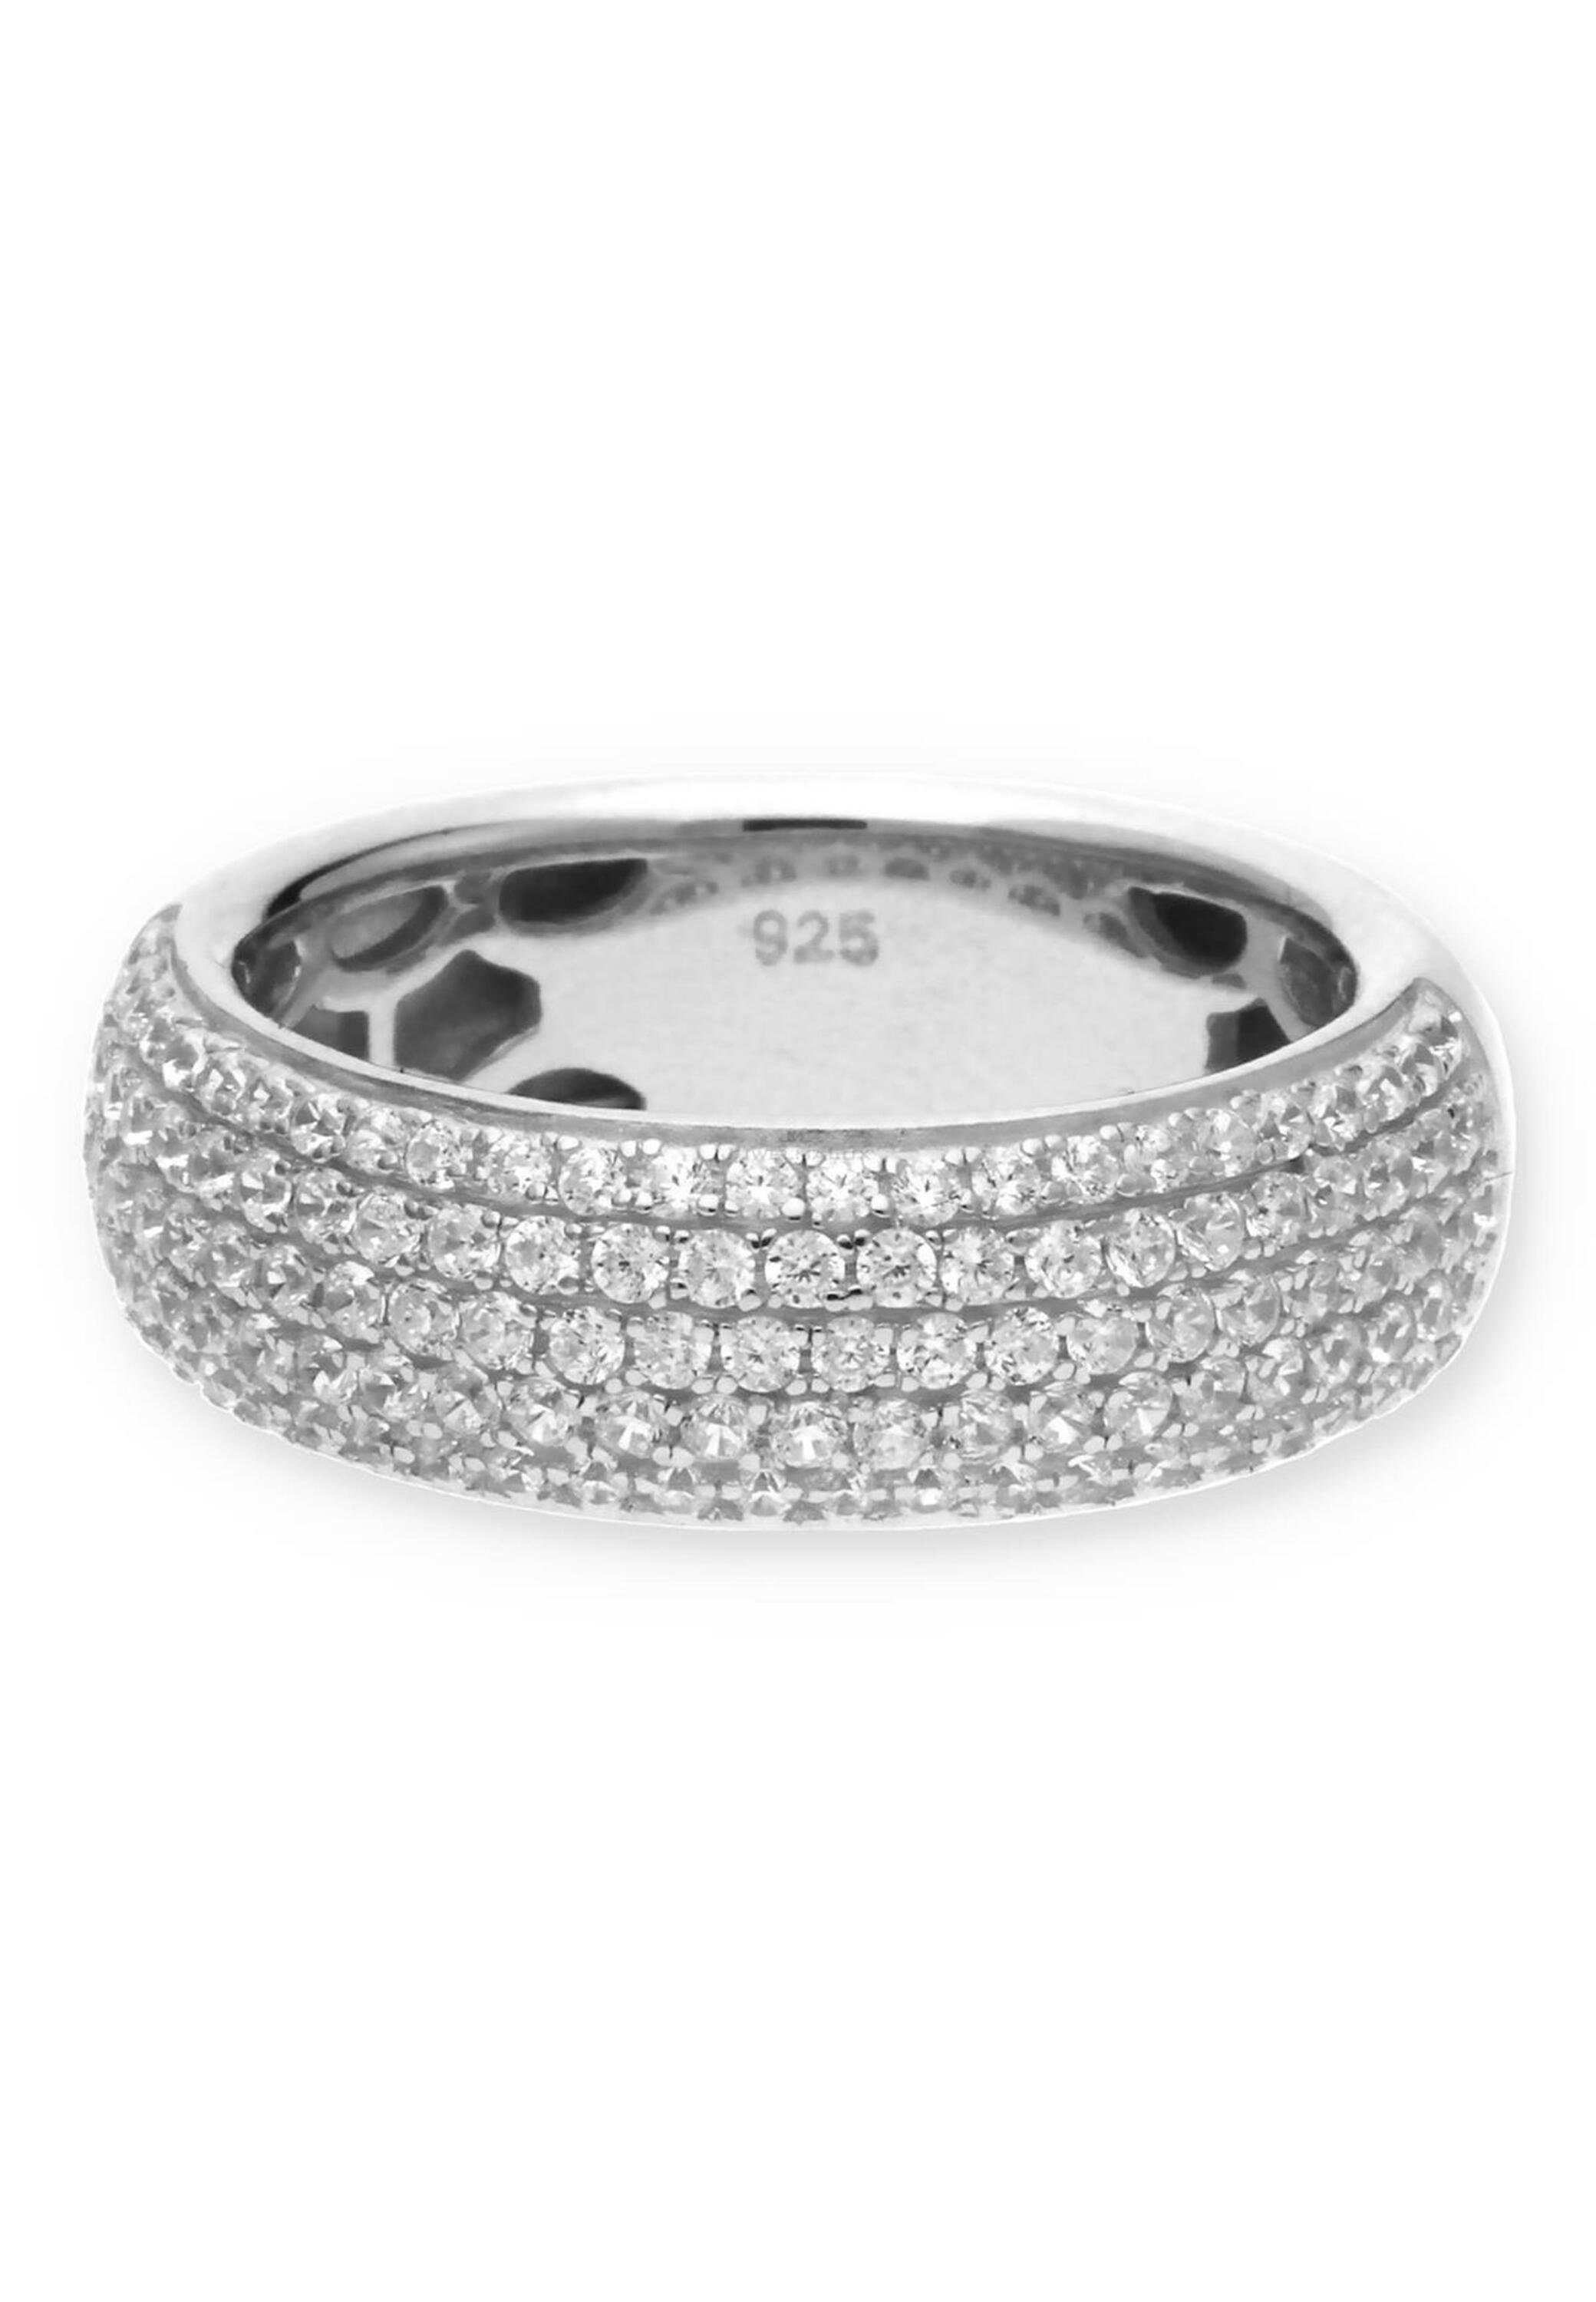 JuwelmaLux Silber Ring Silberring